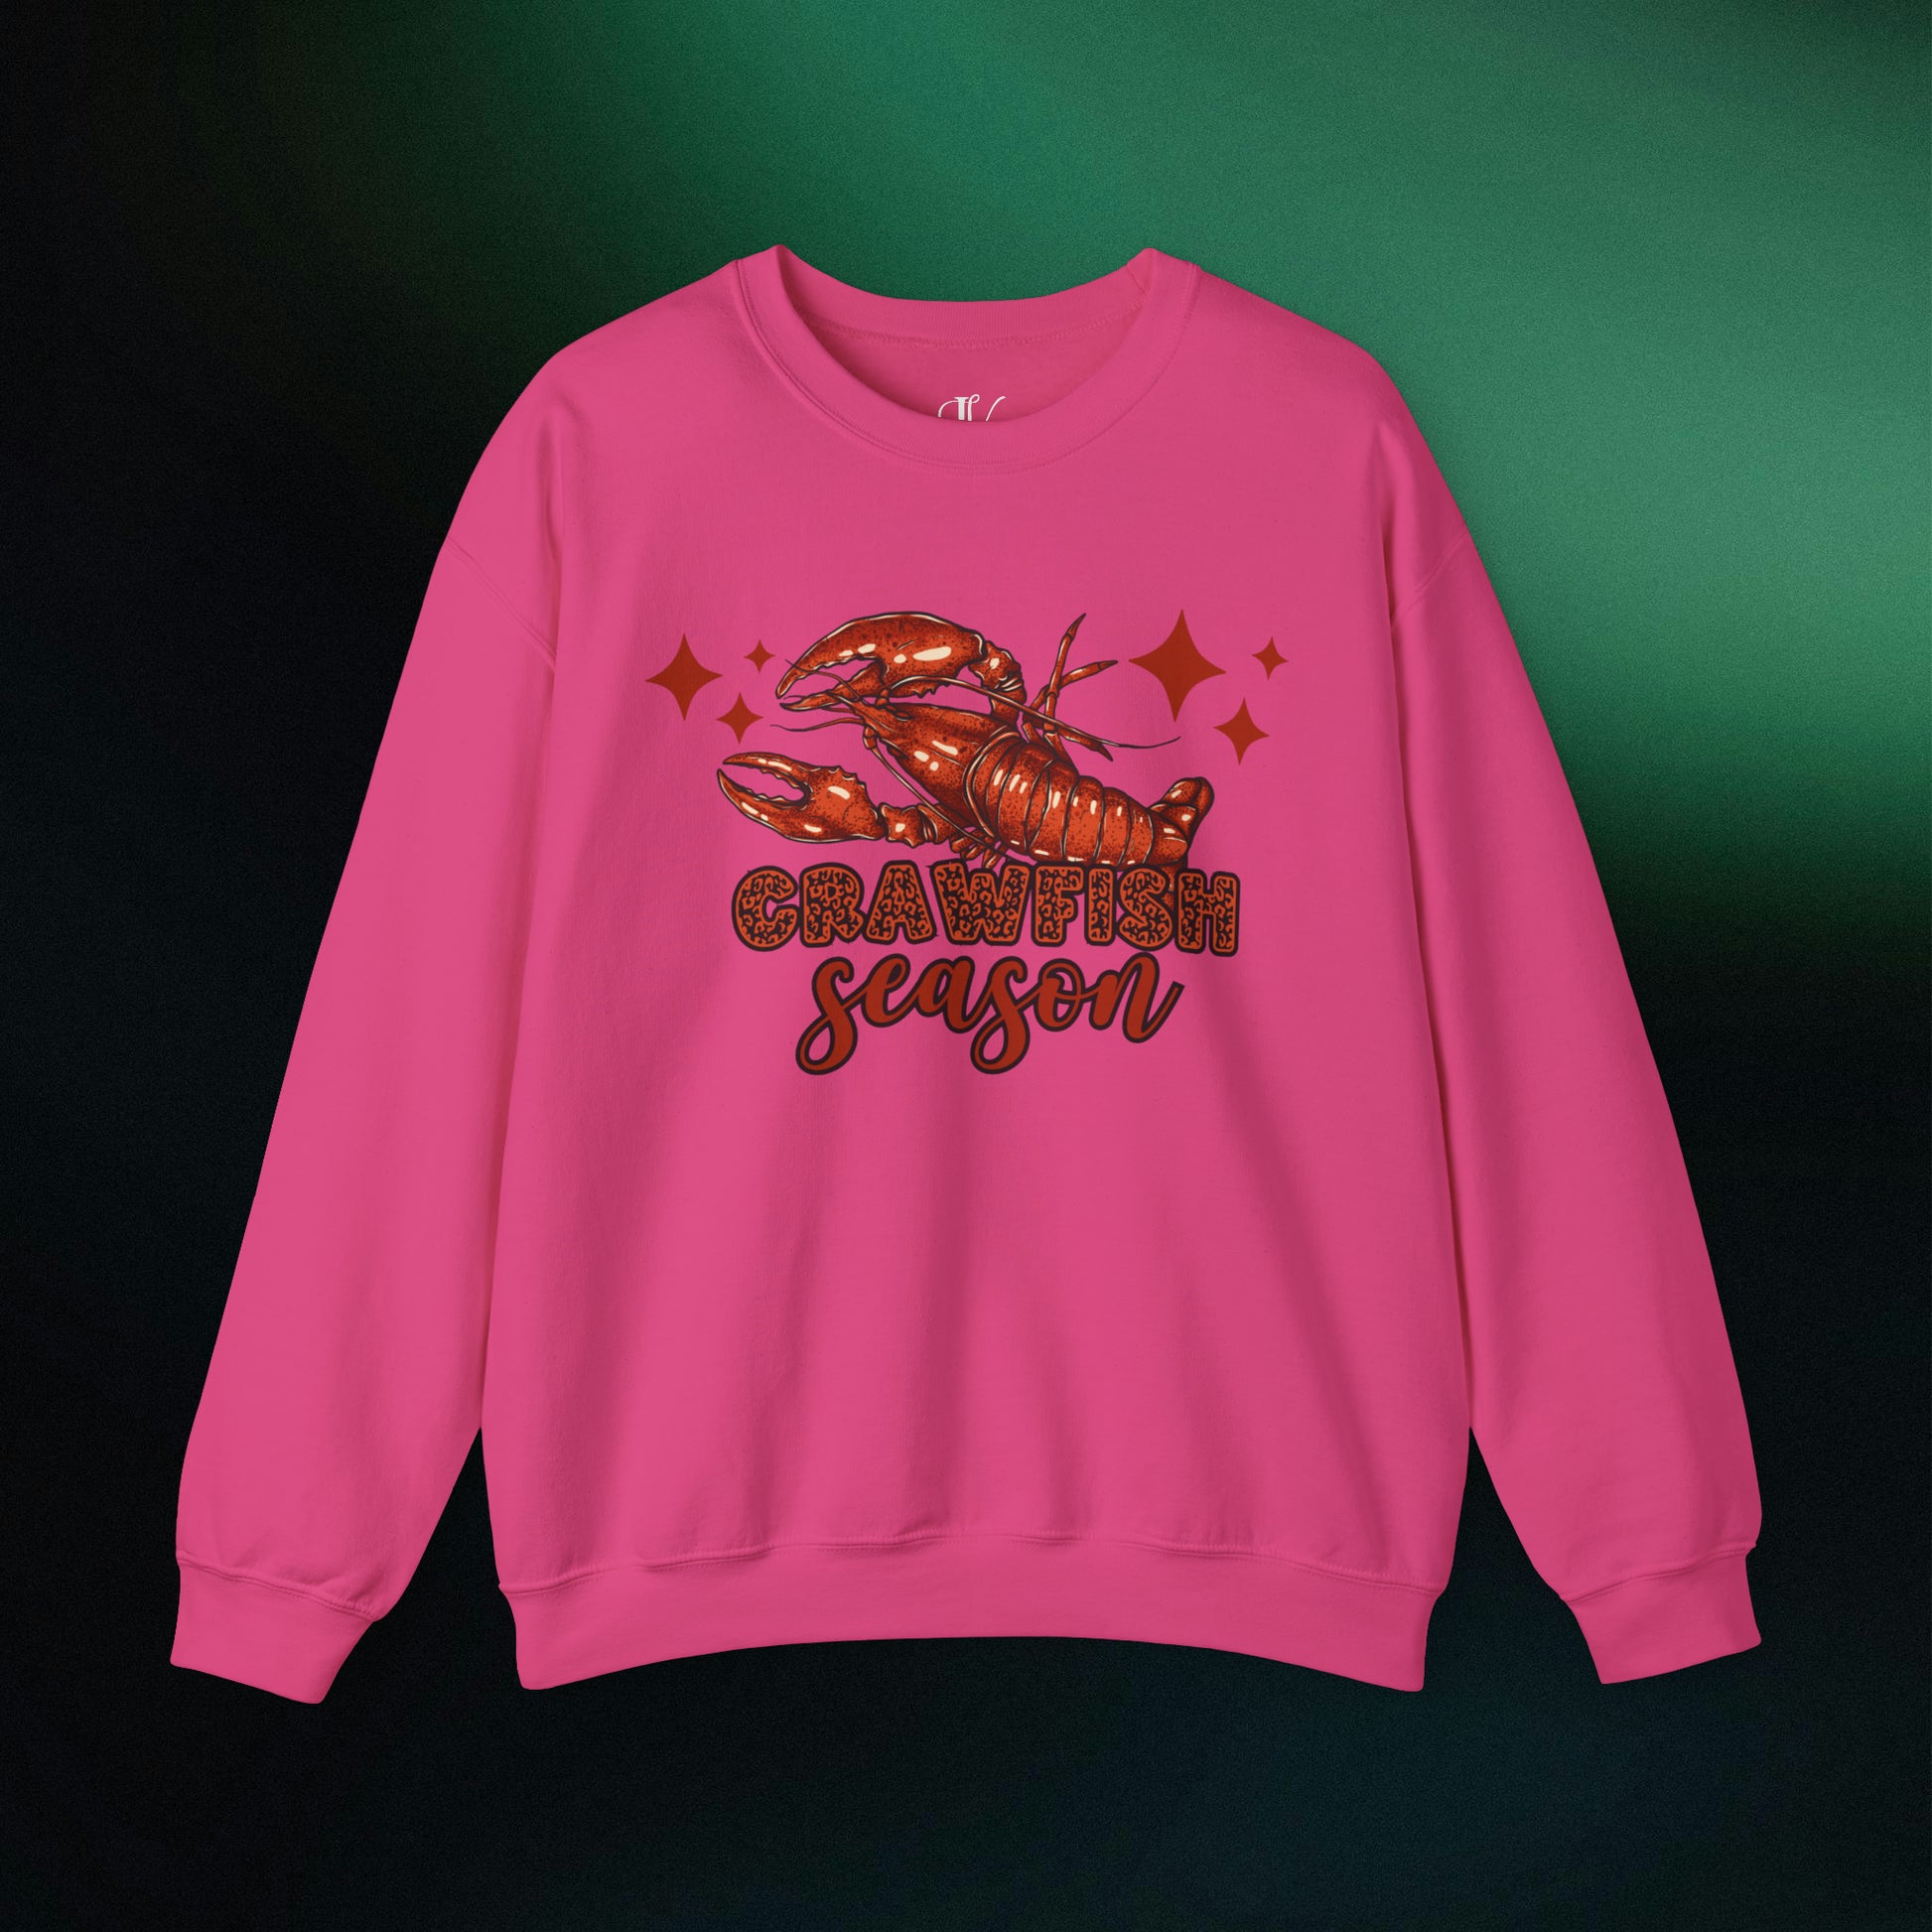 Celebrate Crawfish Season: Mardi Gras Sweatshirt, Crawfish Lovers Sweater, Louisiana Crew Tee | Crawfish Season Apparel - Embrace the Flavor and Fun of the Season with Stylish Crawfish-Themed Wear! Sweatshirt S Heliconia 